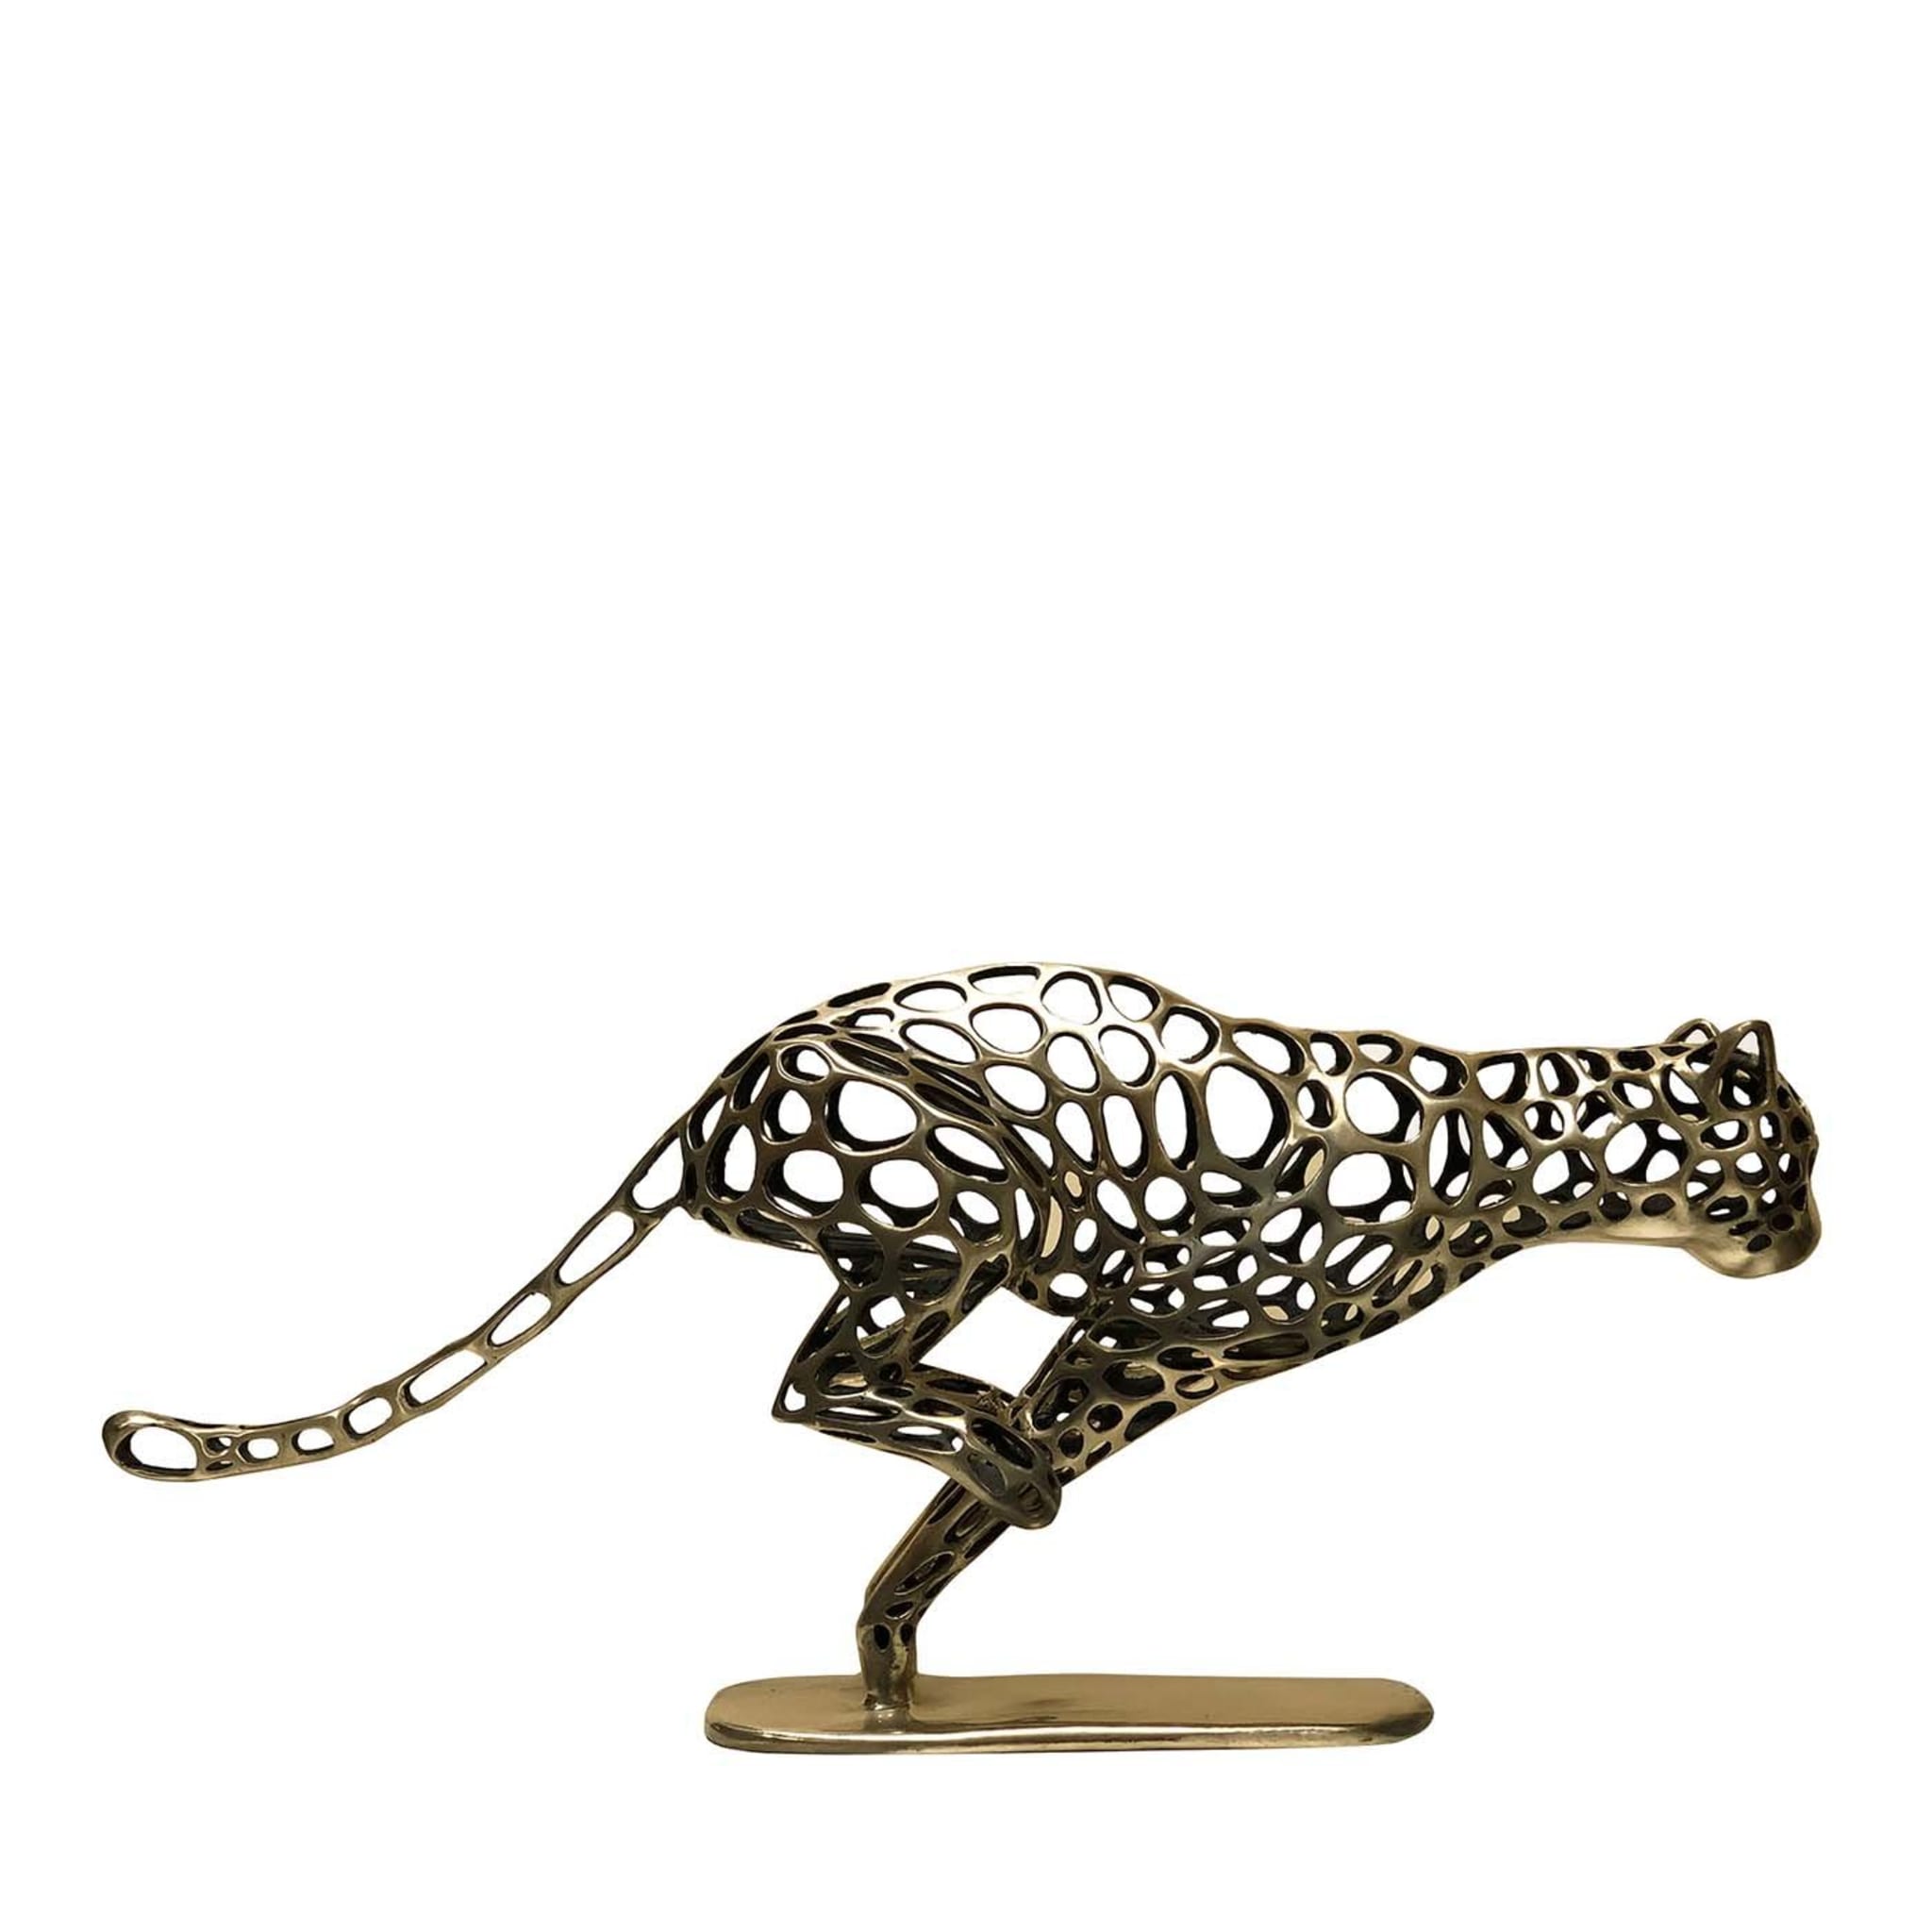 Running Cheetah Sculpture Fonderia Artistica Ruocco